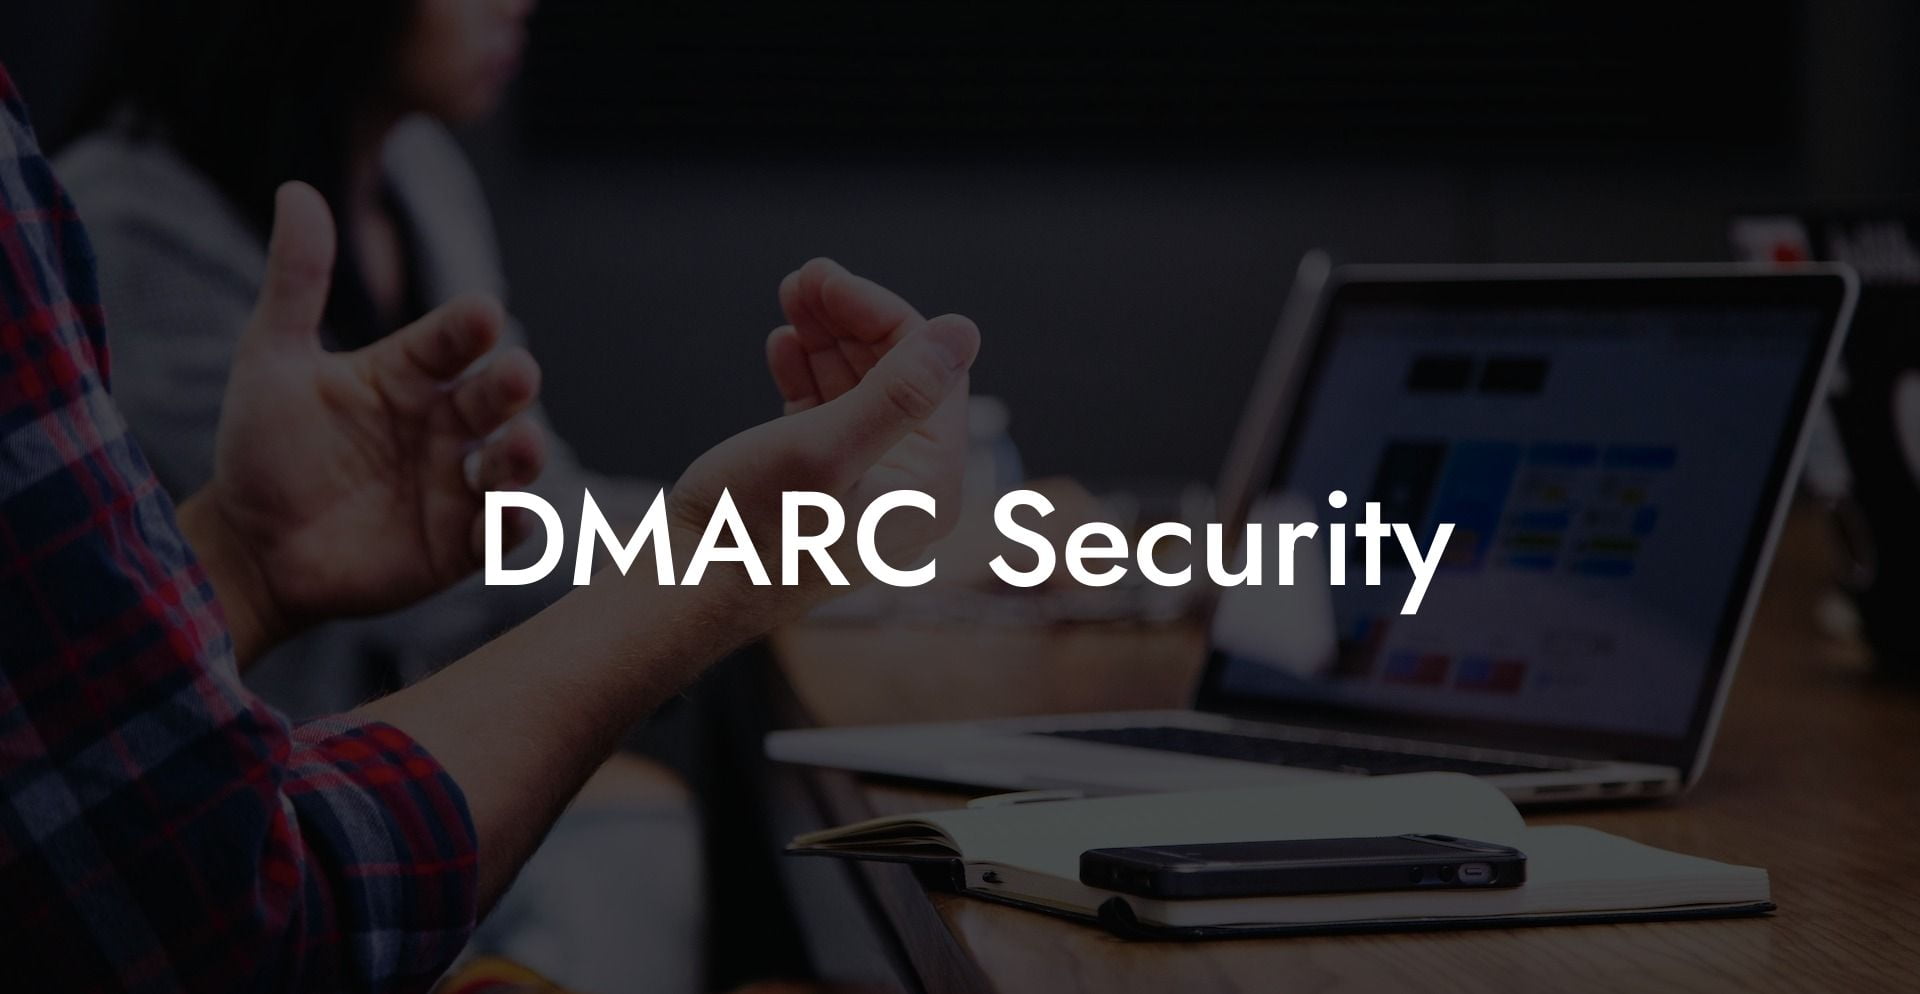 DMARC Security